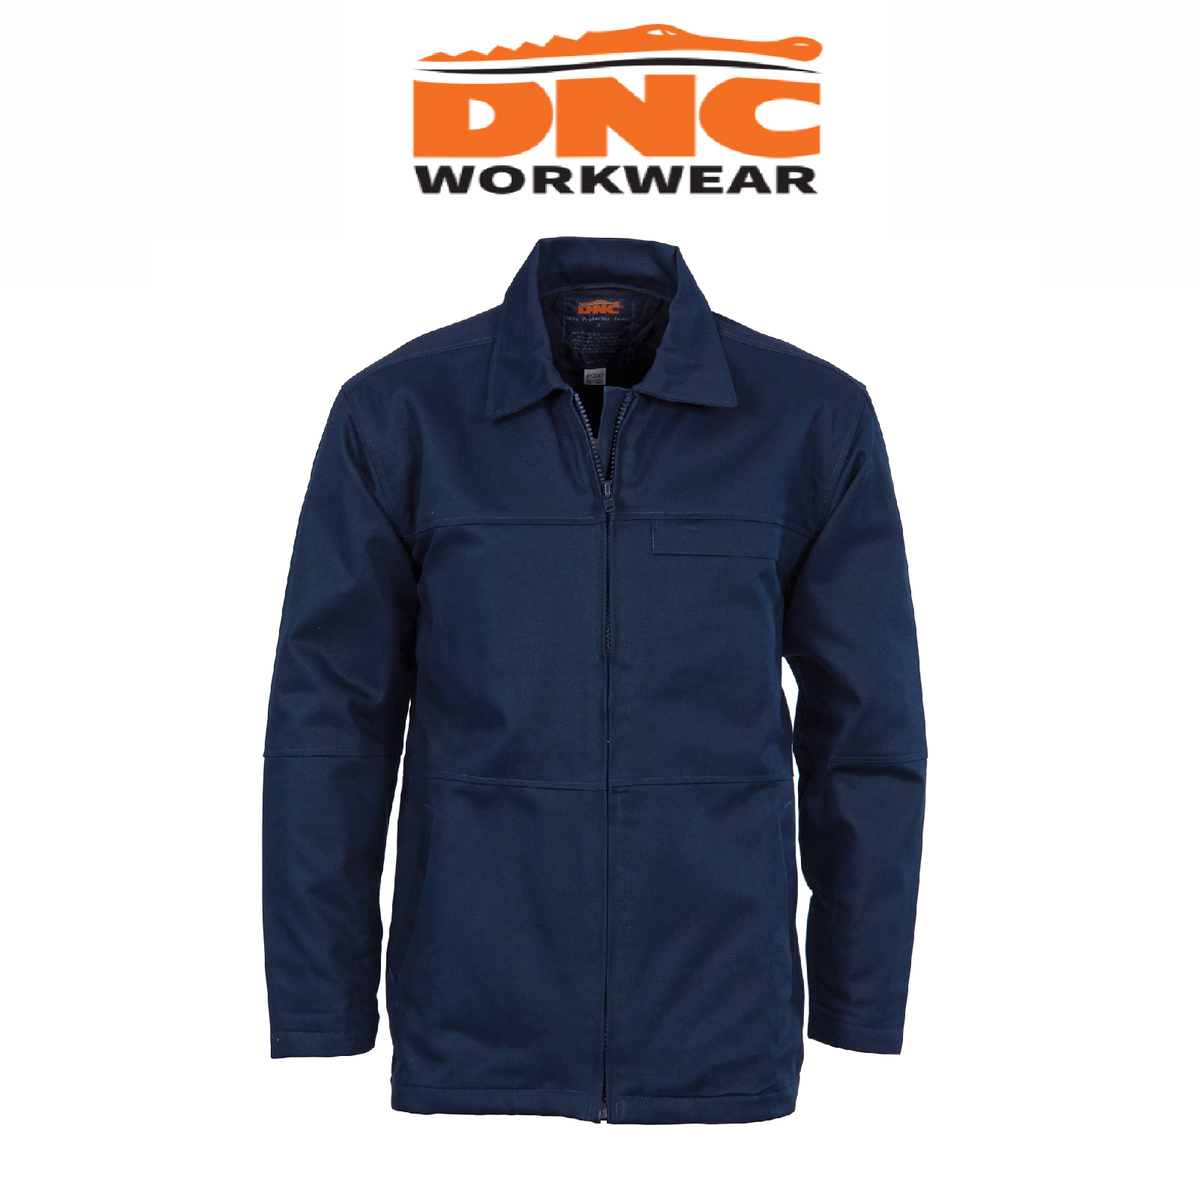 DNC Workwear Mens Protector Cotton Jacket Warm Winter Comfort Work Jackets 3606